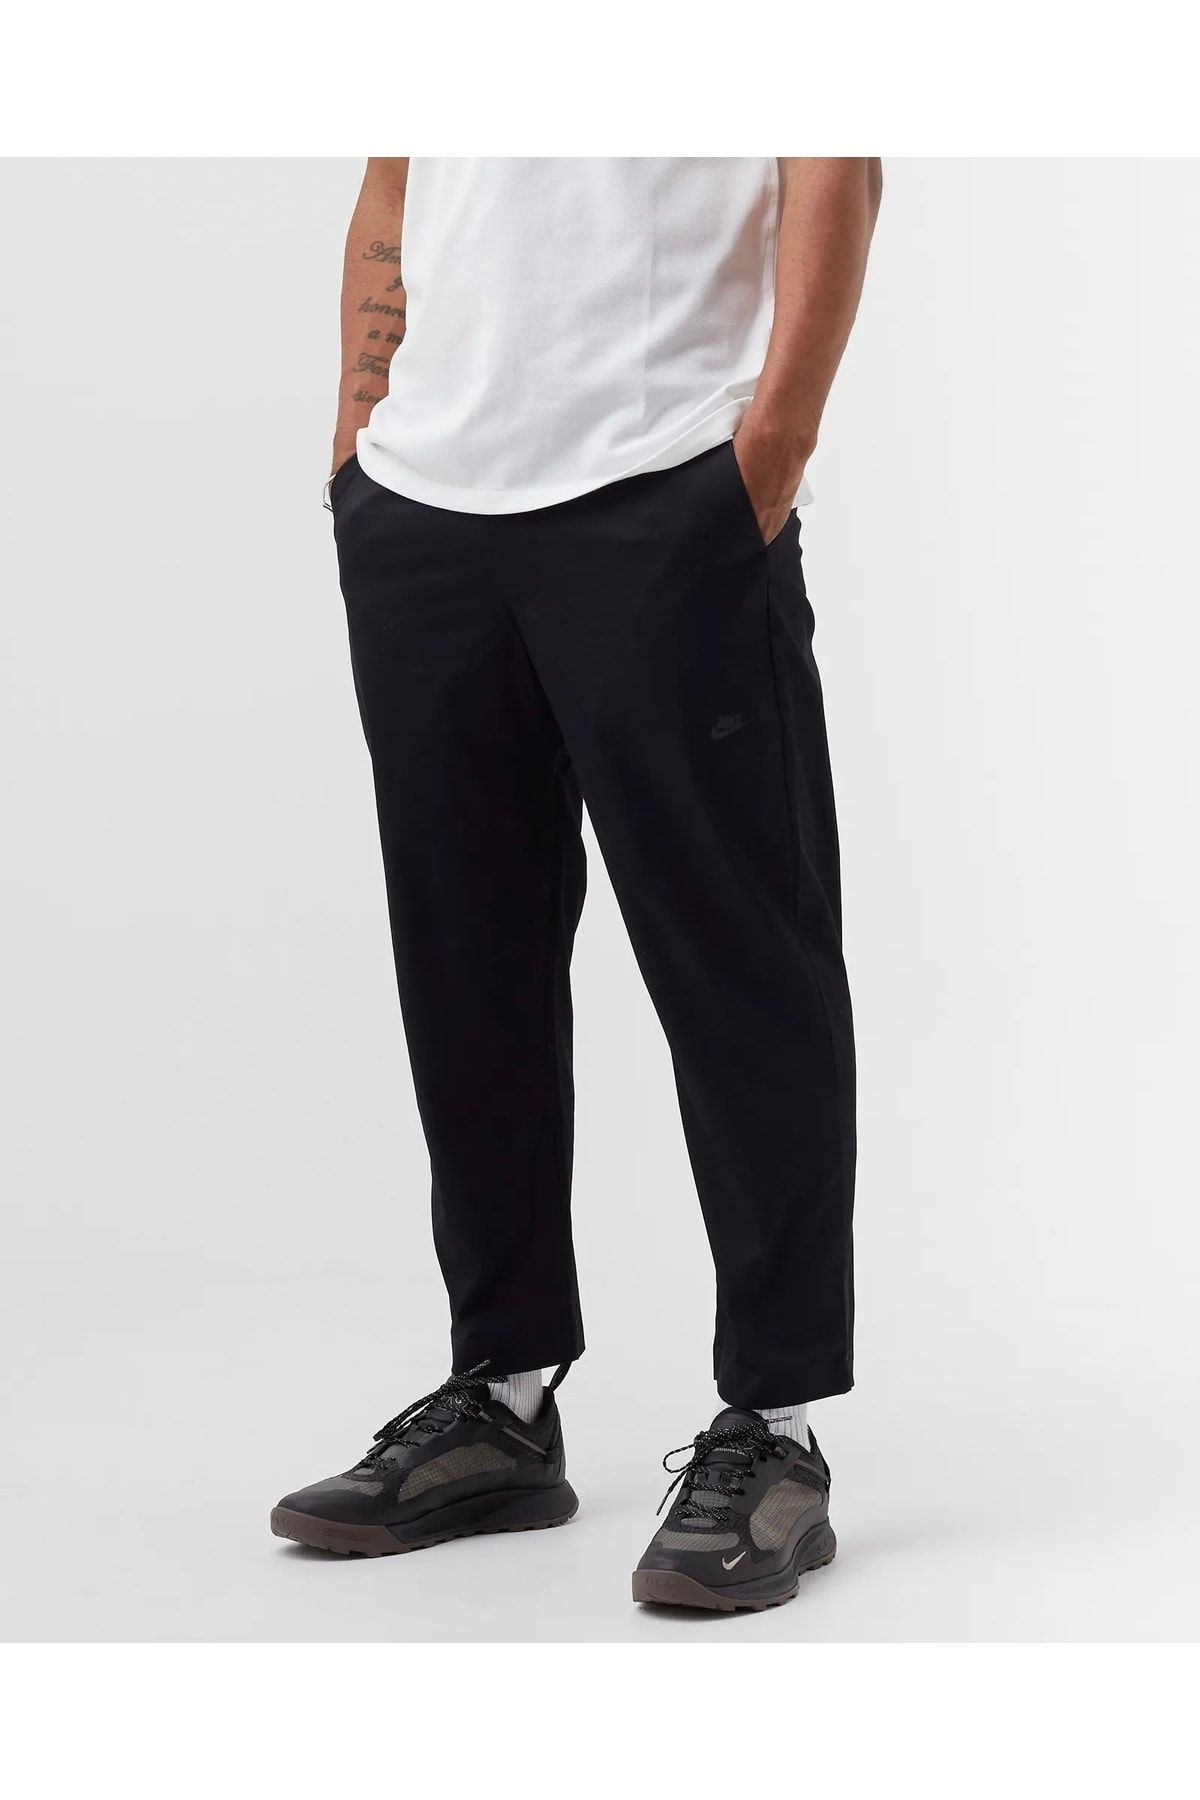 Nike Sportswear Style Essentials Astarsız Kısa Erkek Pantolon - Siyah